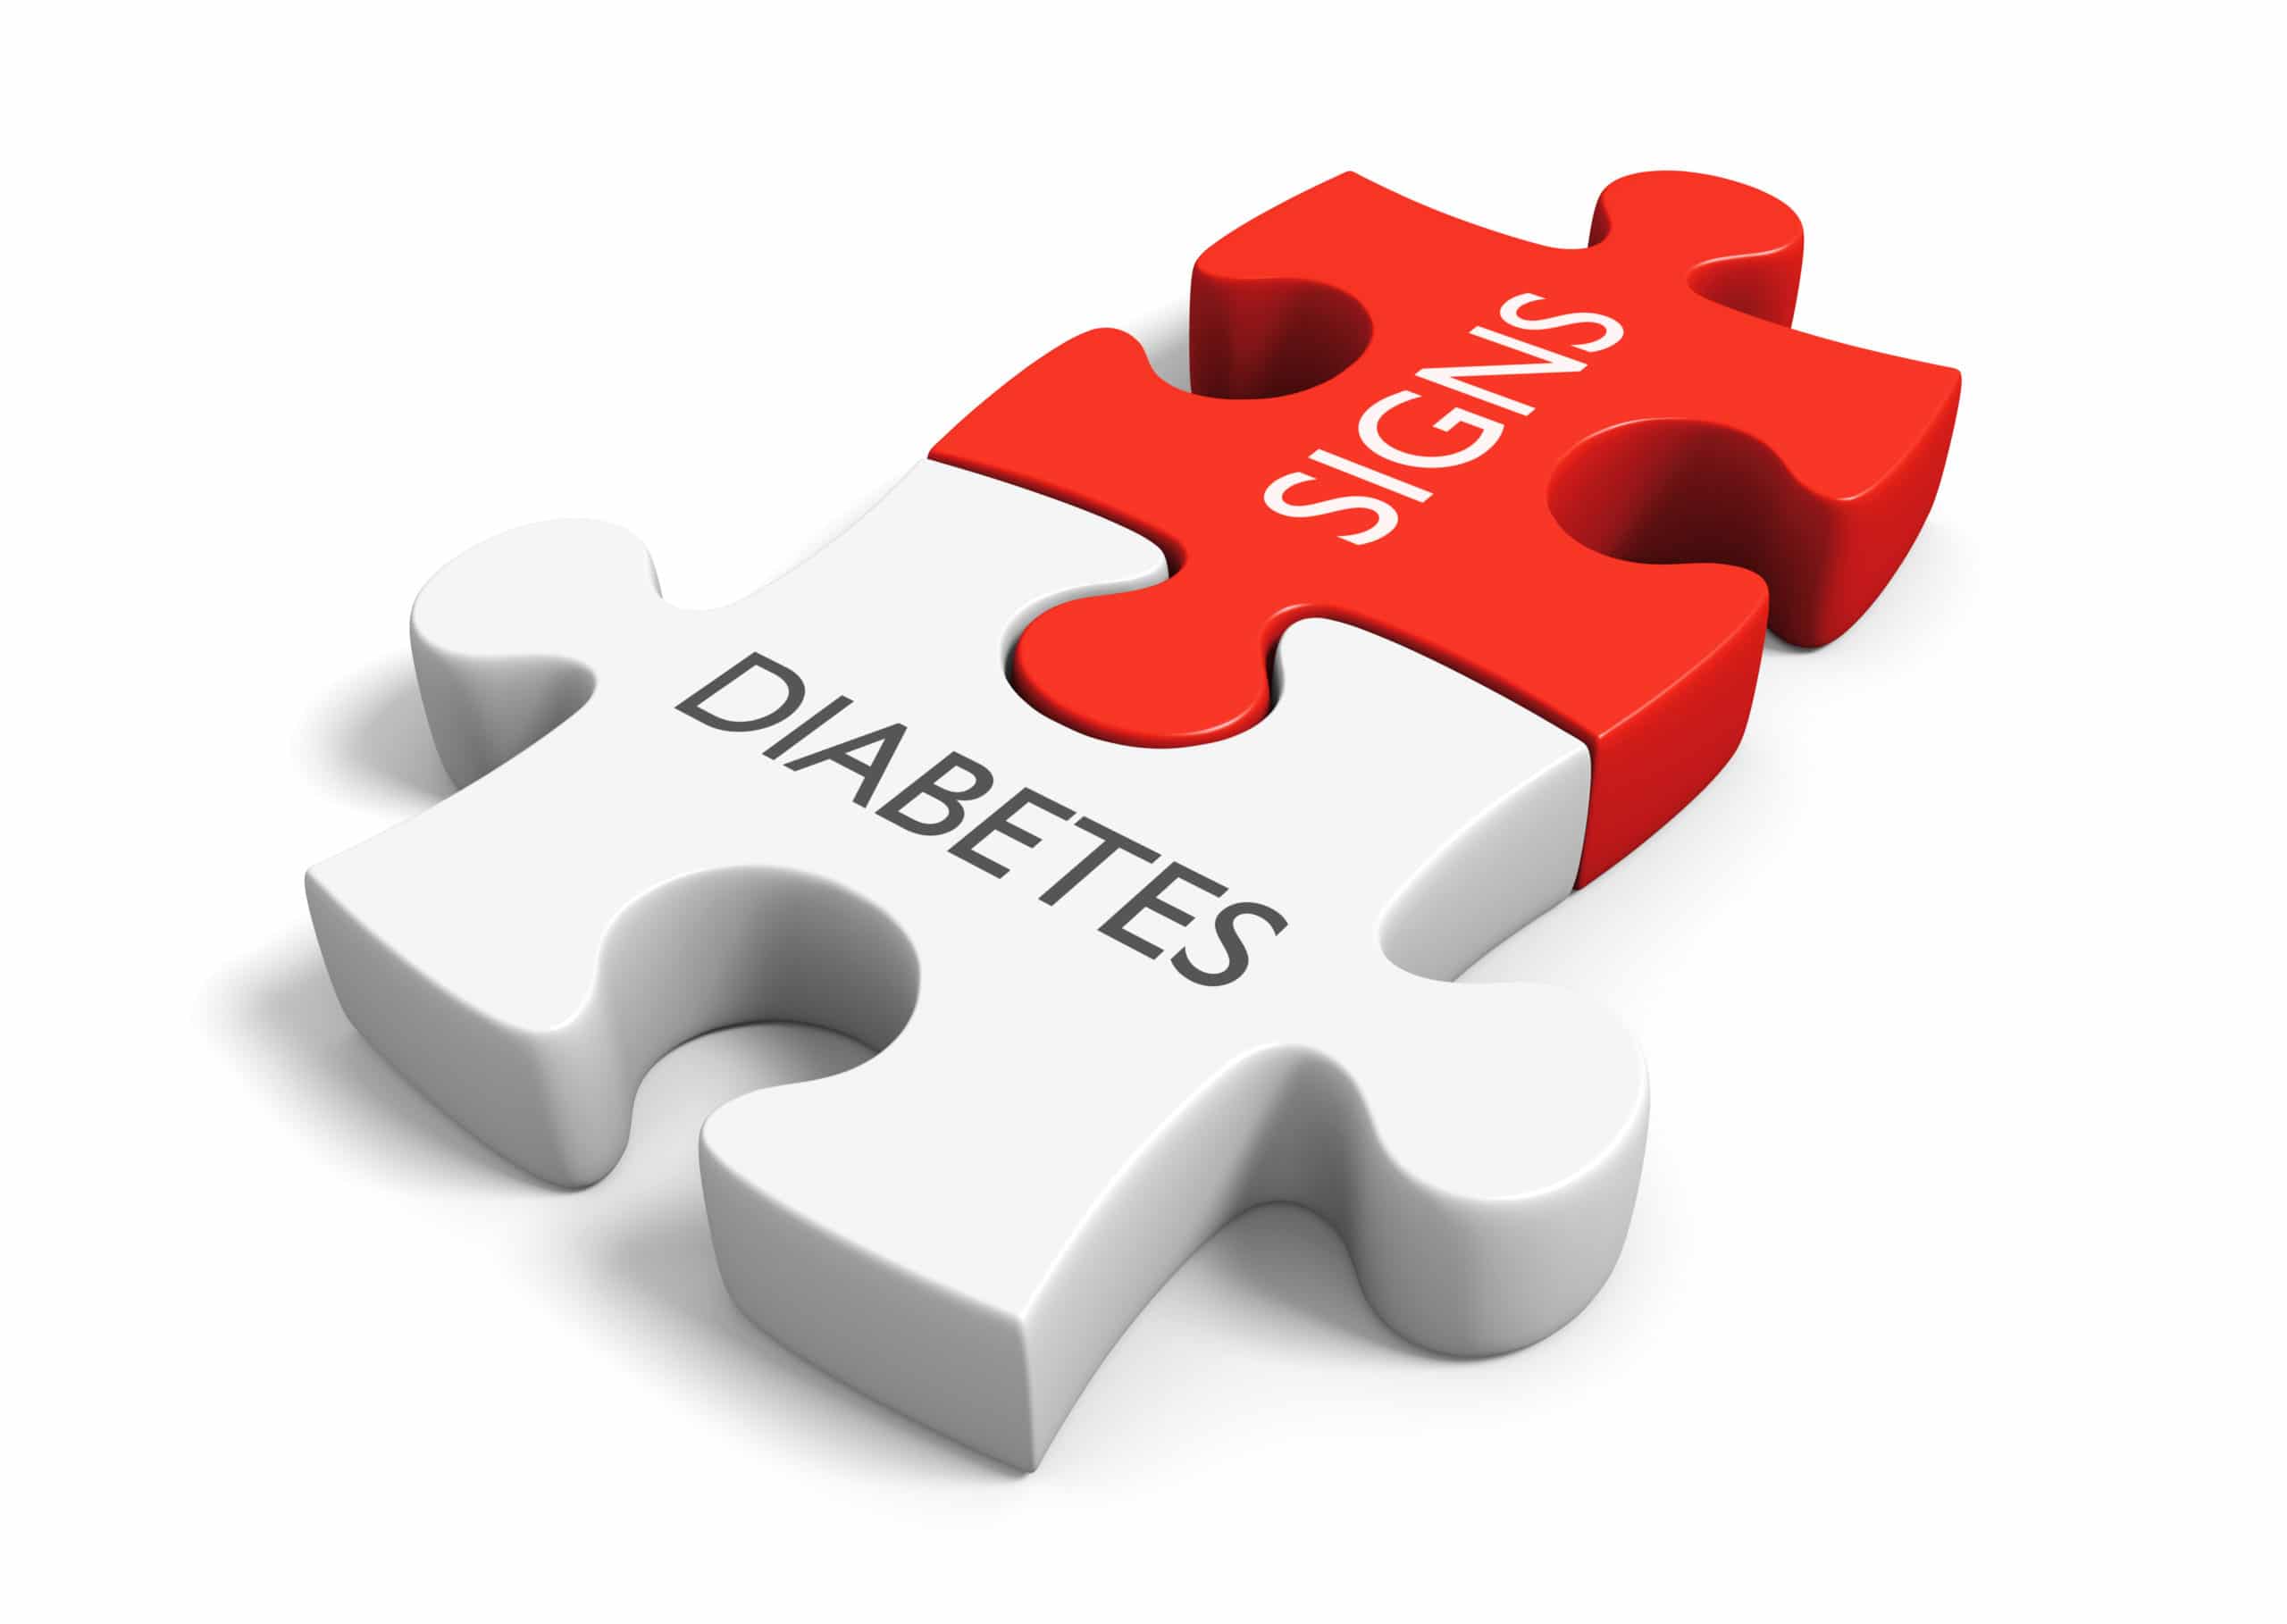 Diabetes mellitus metabolic disease signs and symptoms concept, 3D rendering